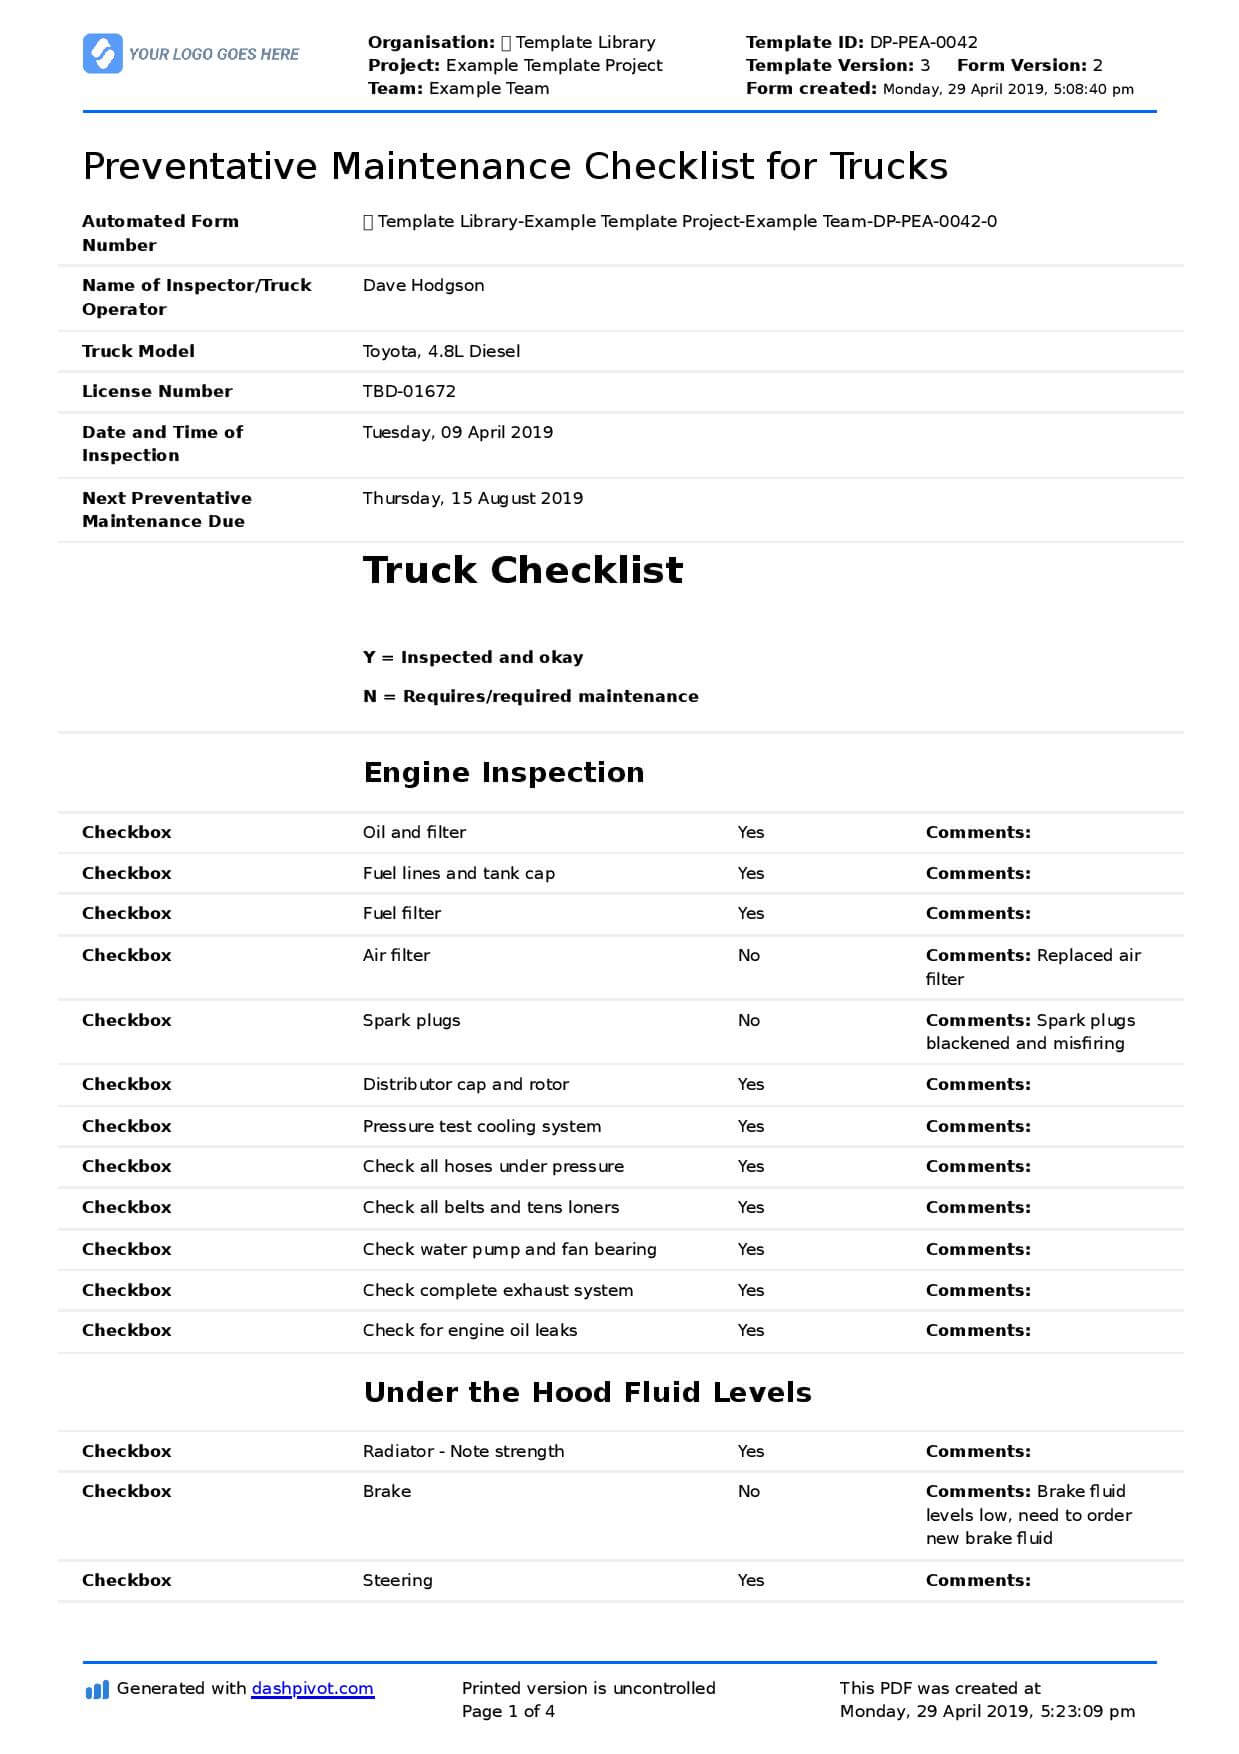 Preventative Maintenance Checklist For Trucks (Diesel Trucks Regarding Computer Maintenance Report Template